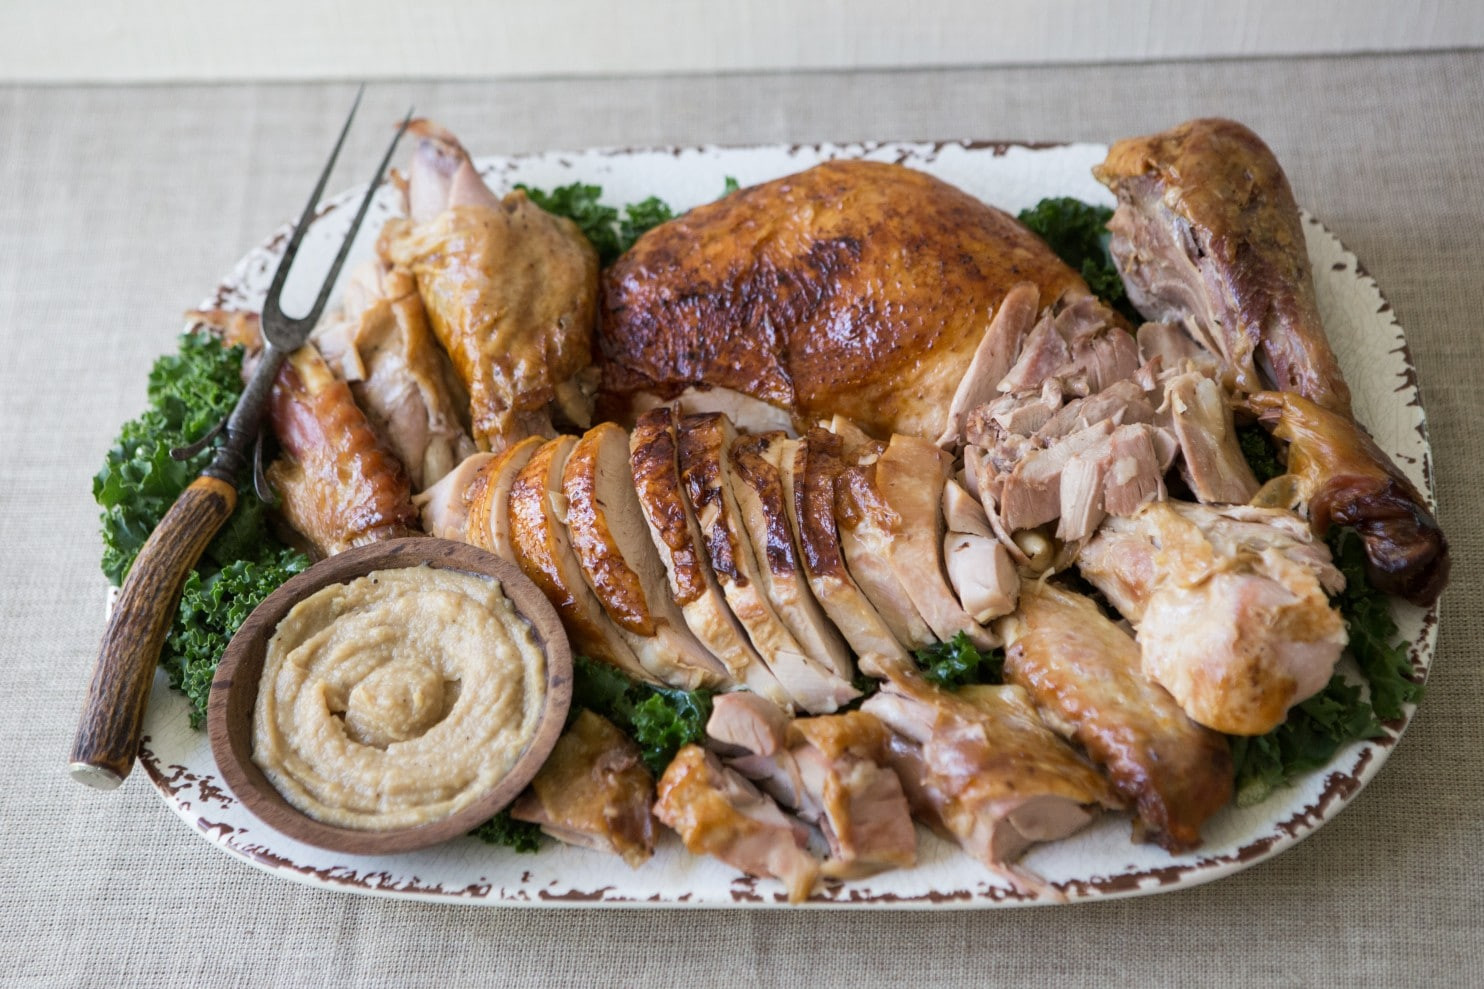 Thanksgiving 2019 Turkey
 When roasting a Thanksgiving turkey I’m a bag lady The